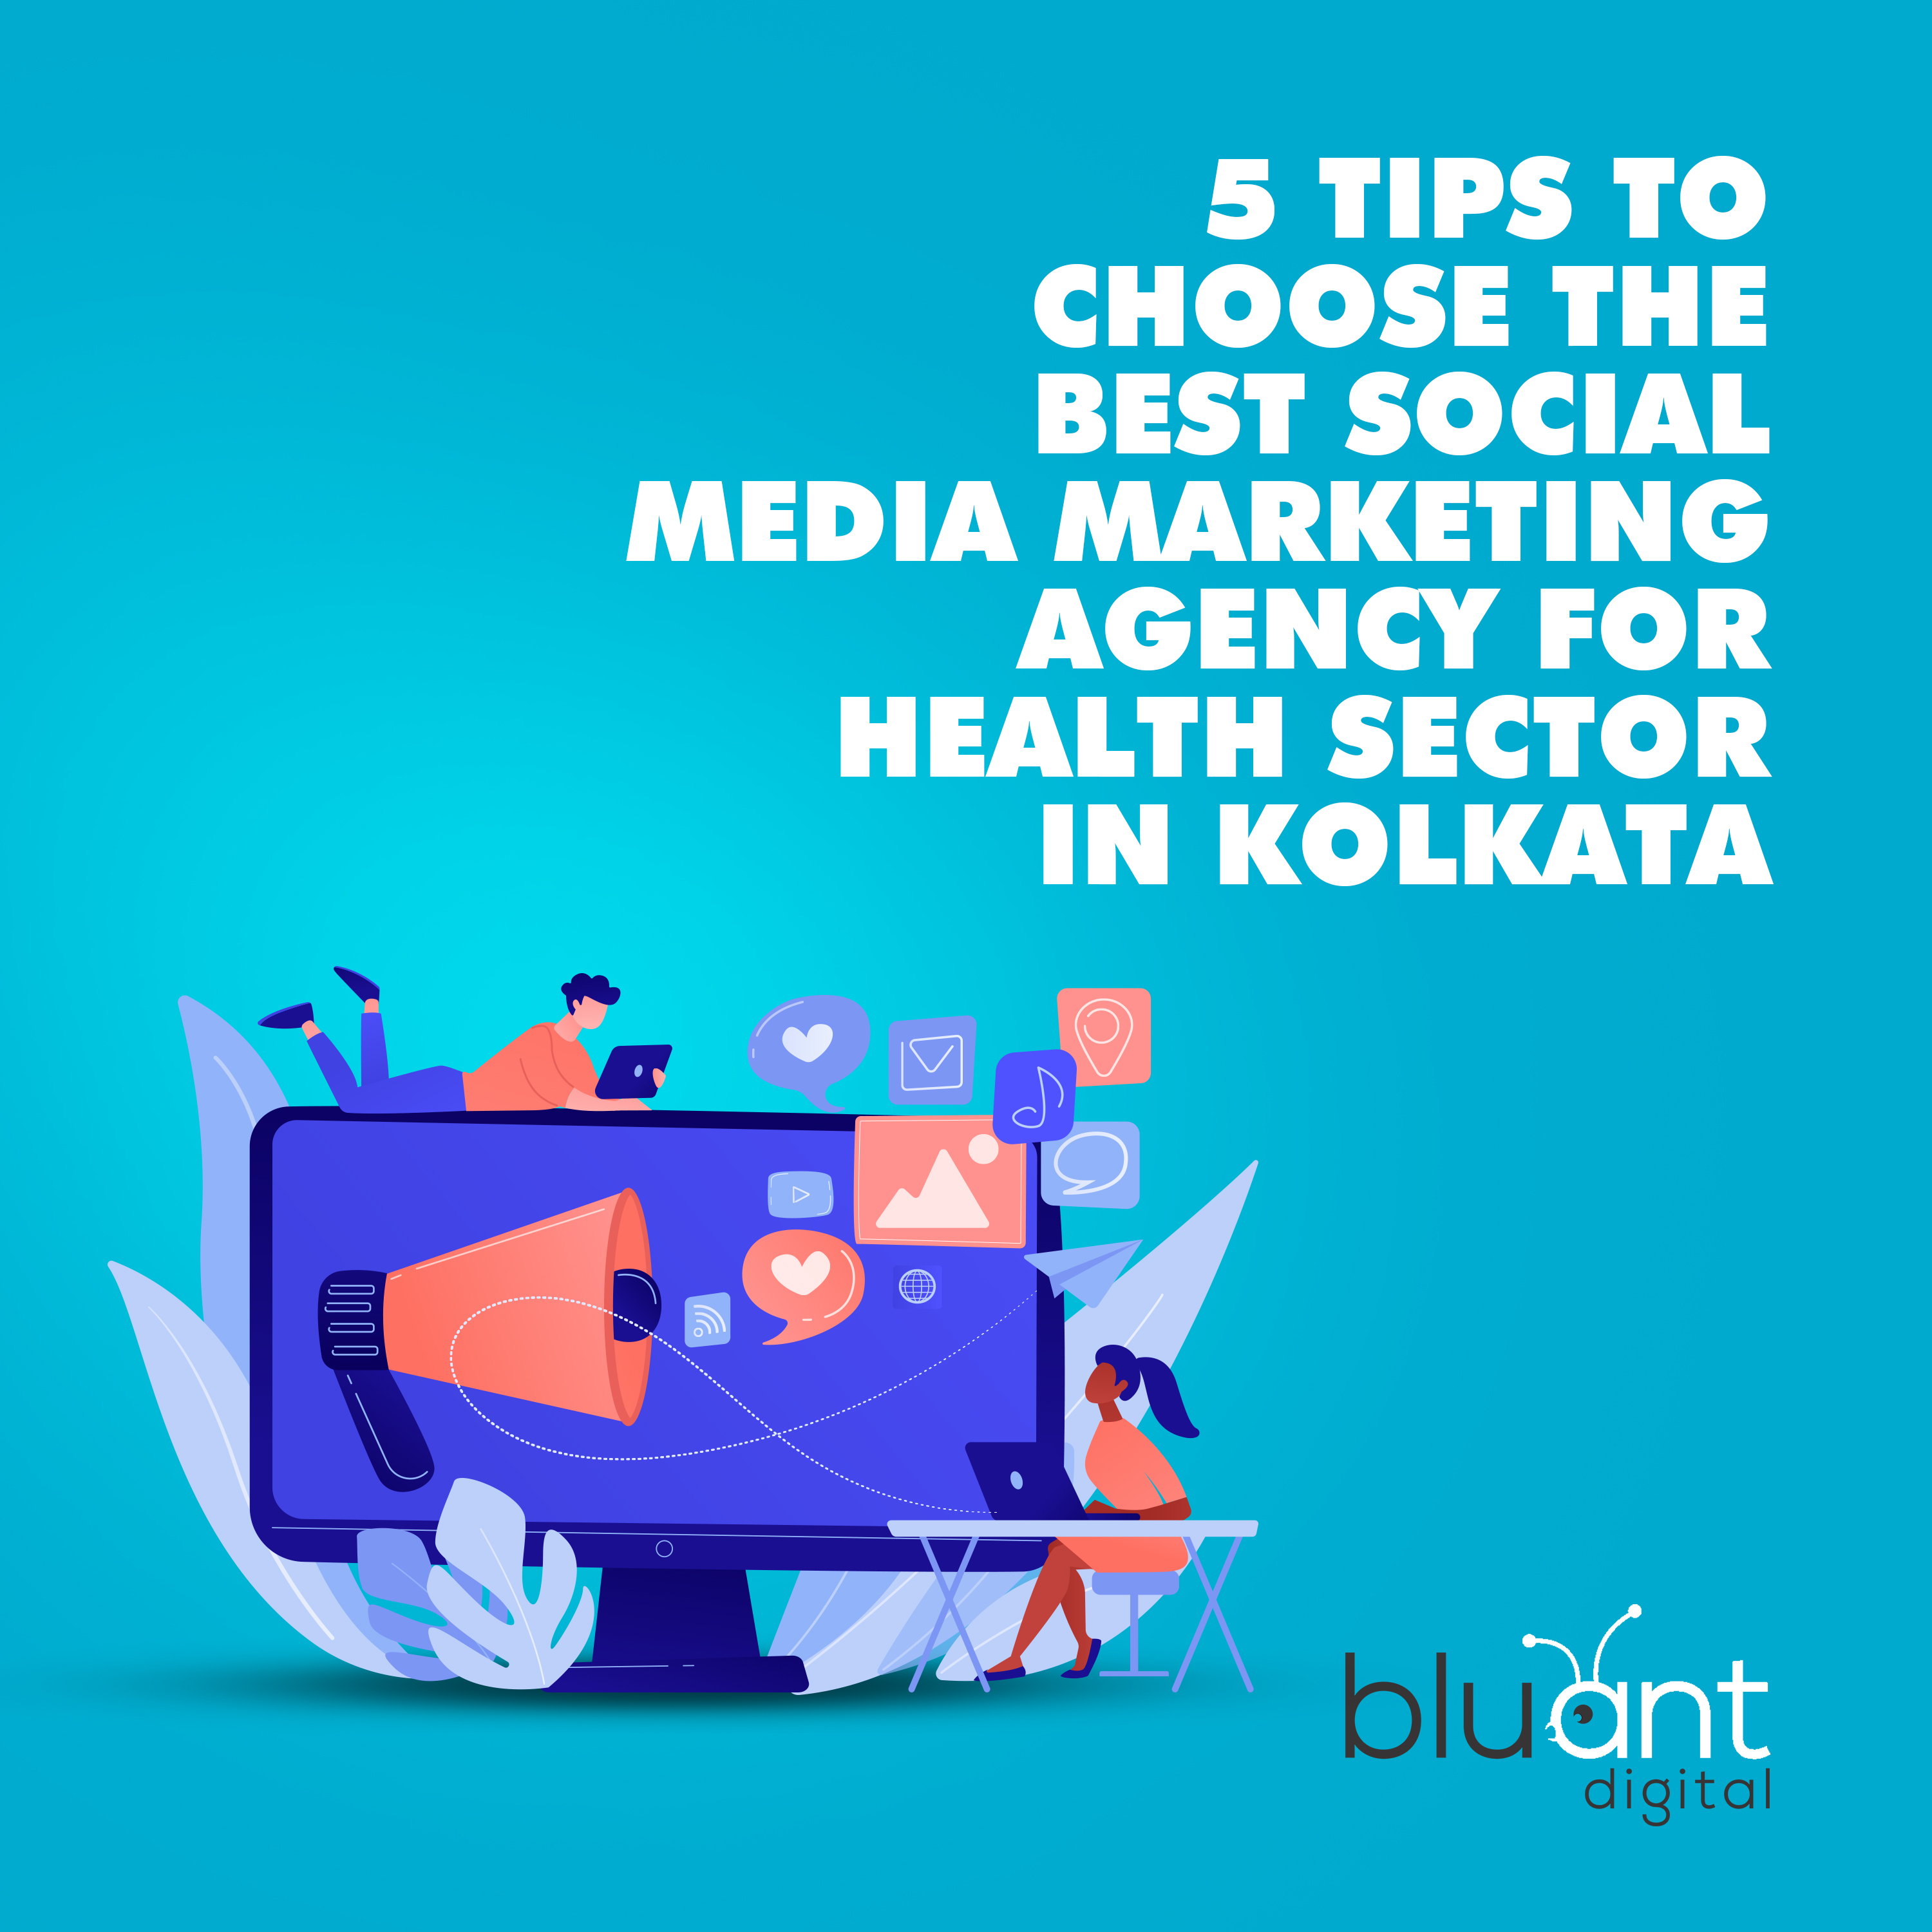 5 Tips to Choose the Best Social Media Marketing Agency for Health Sector in Kolkata